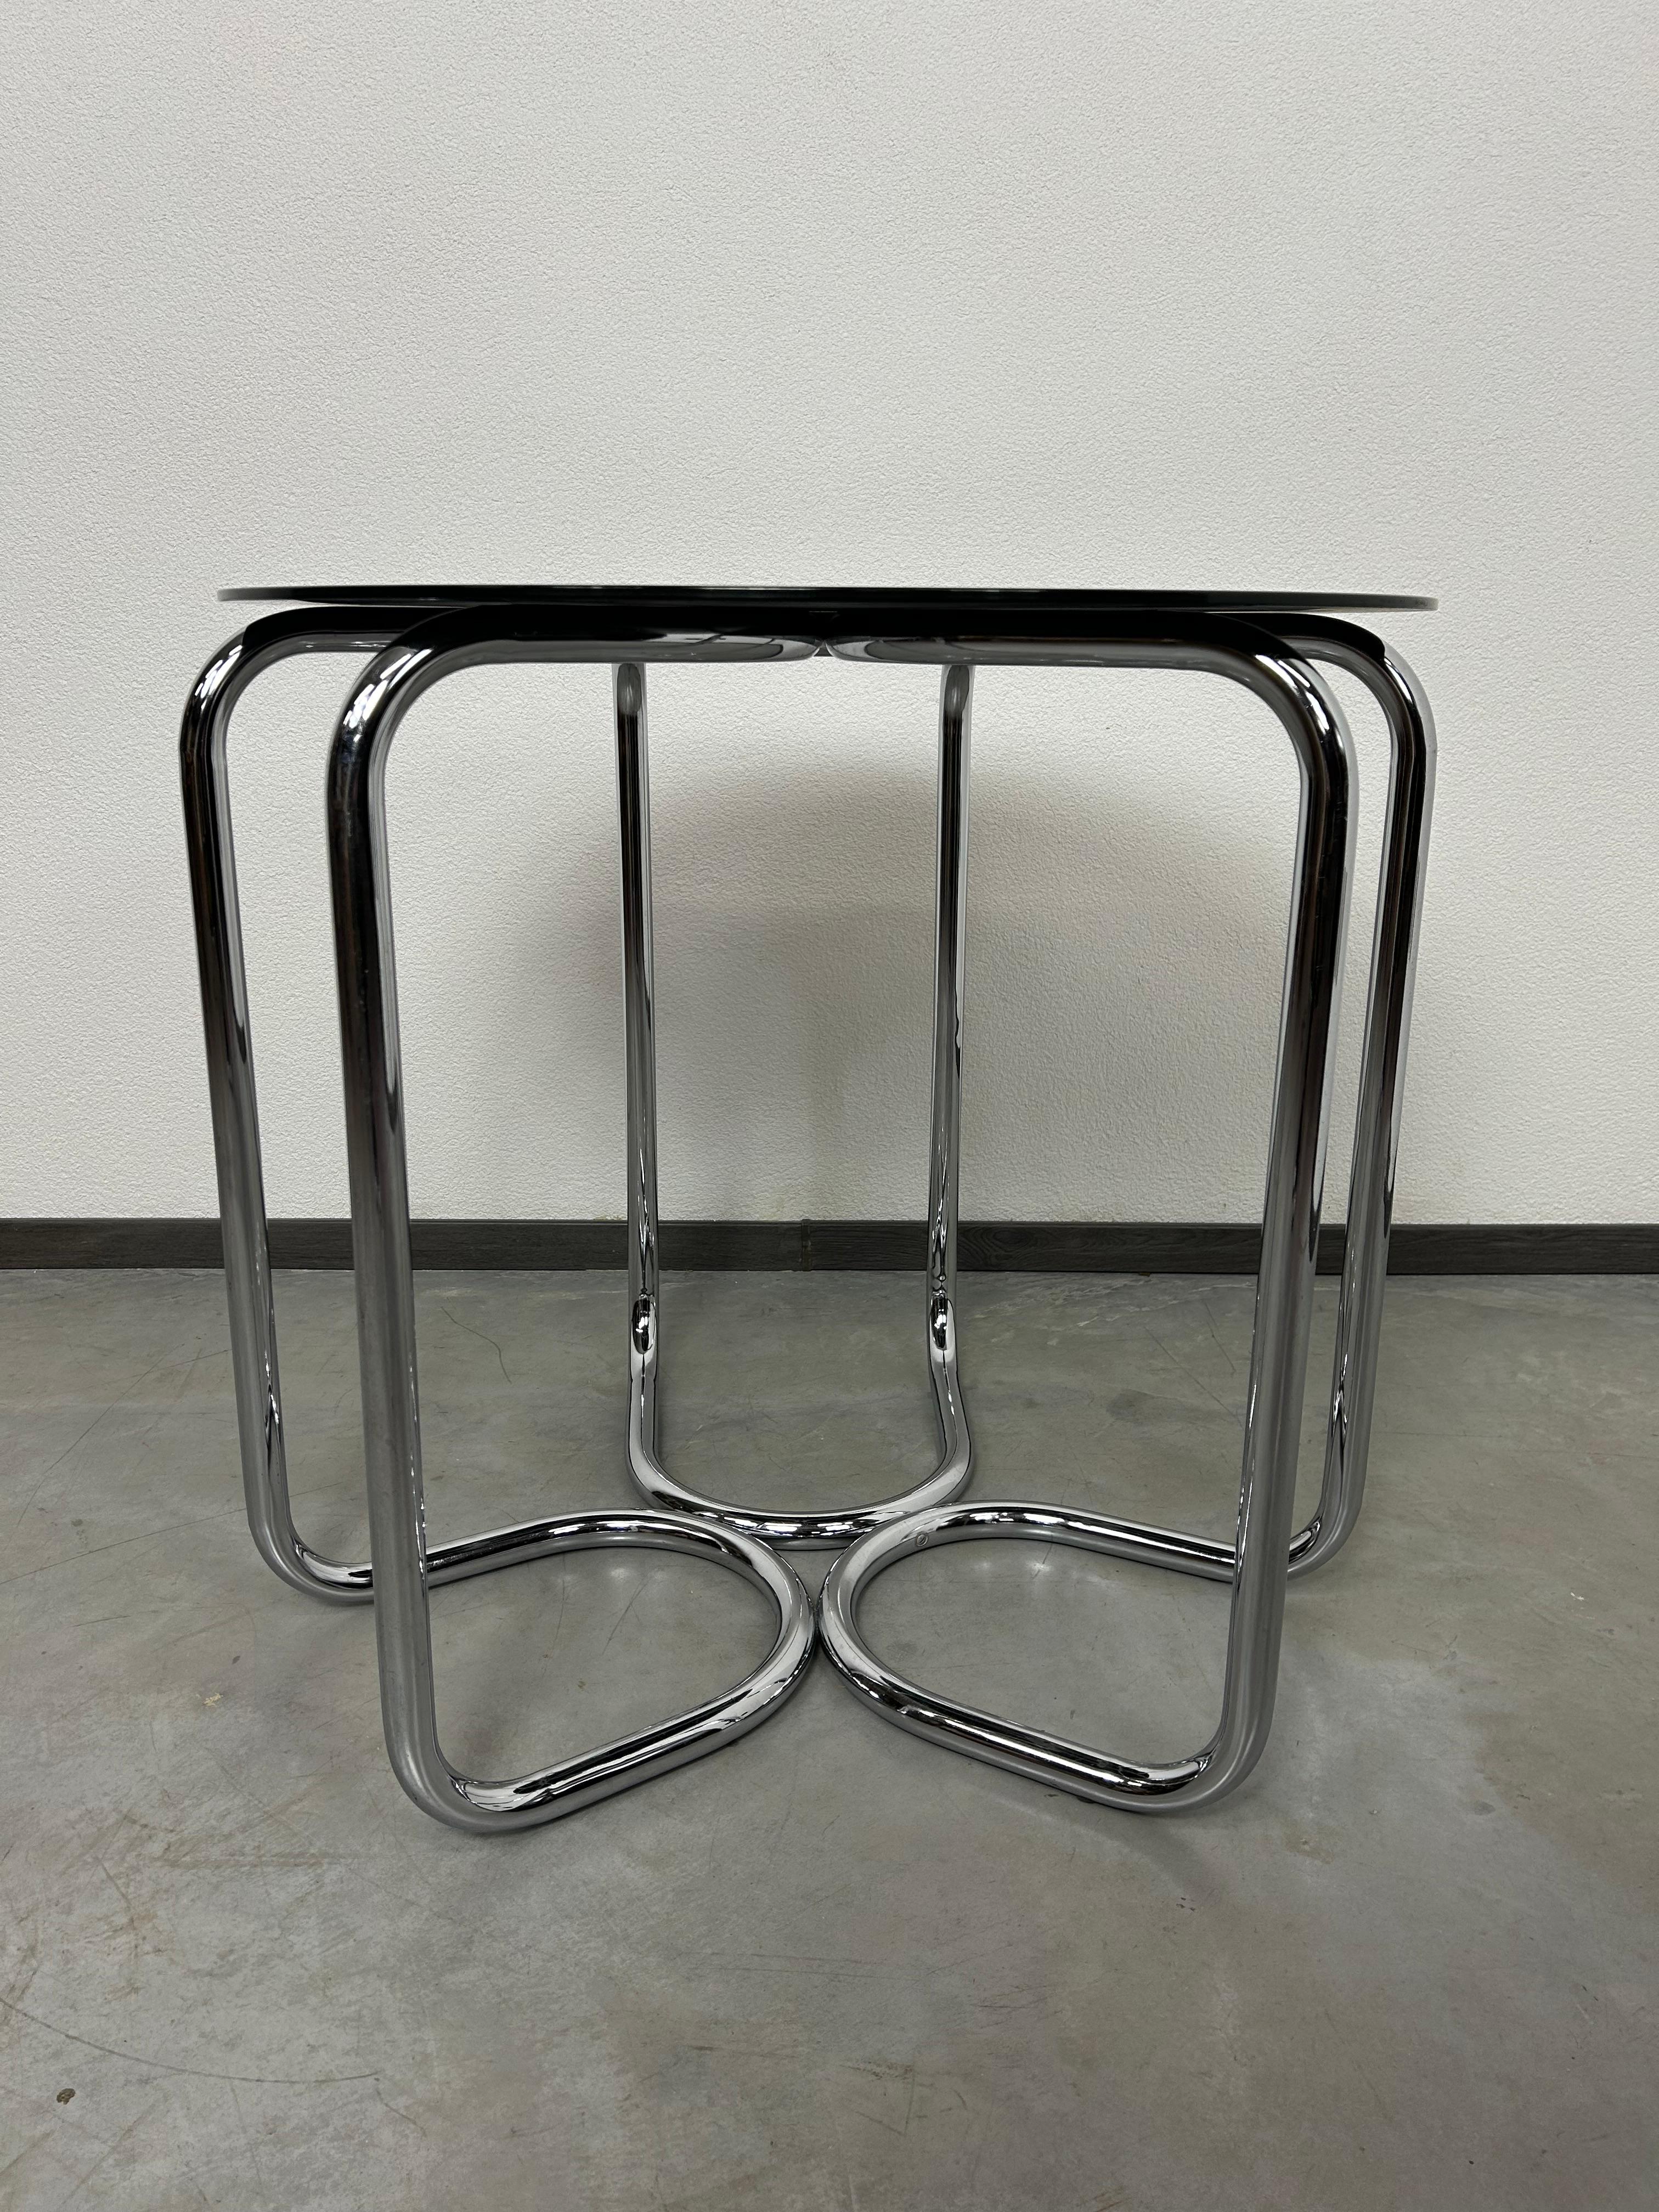 Bauhaus tubular steel coffee table In Excellent Condition For Sale In Banská Štiavnica, SK